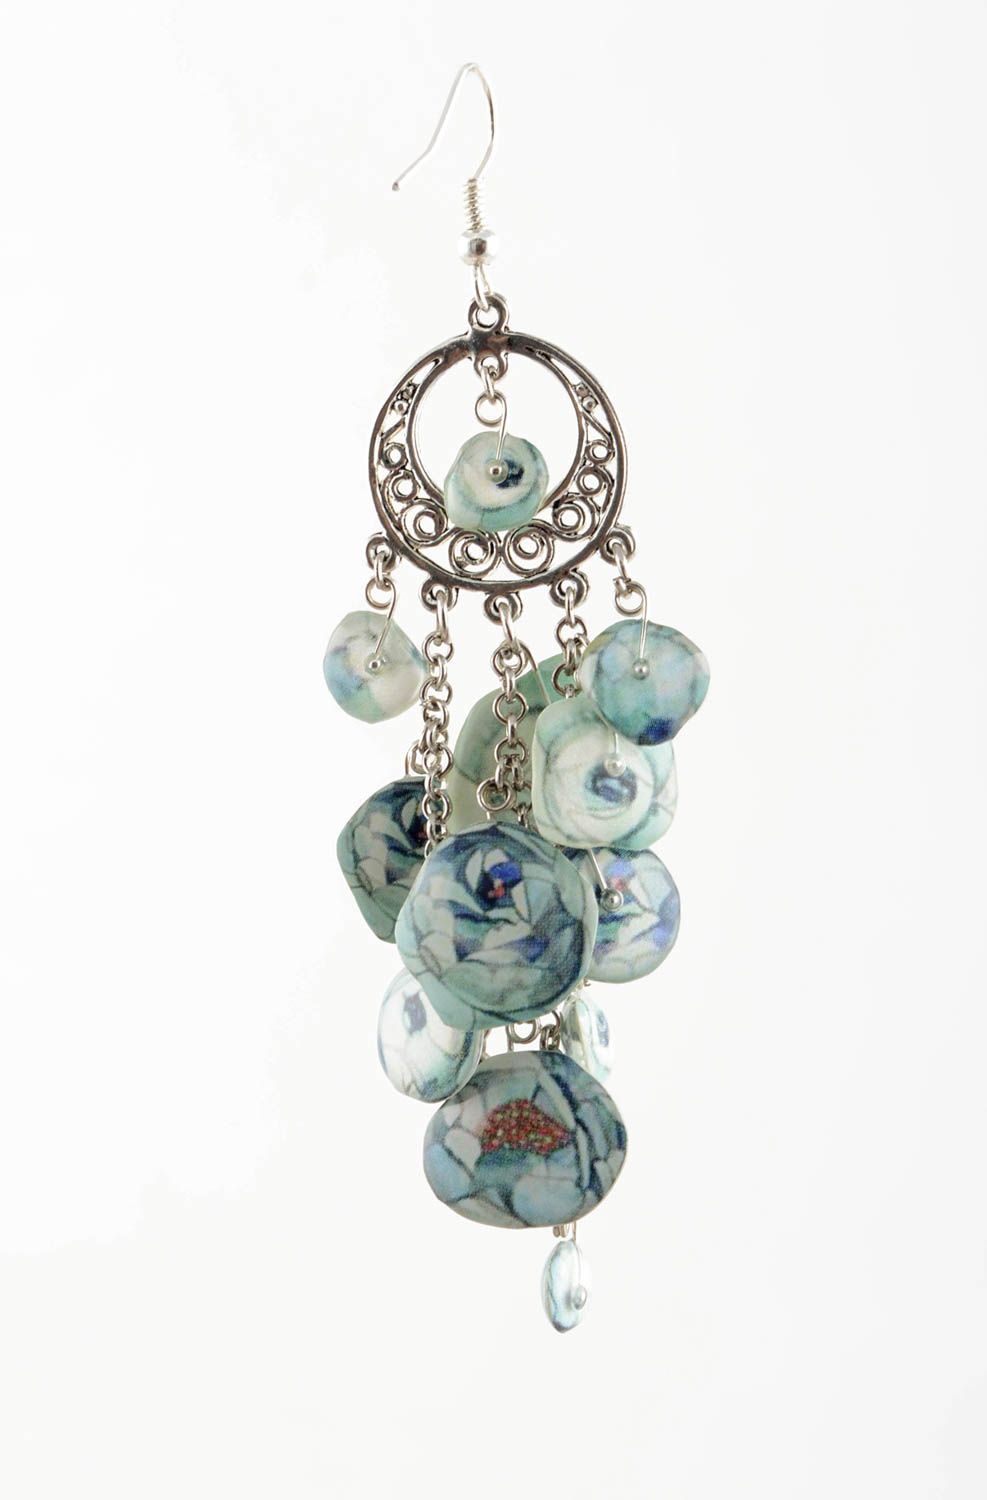 Fashion earrings designer jewelry handcrafted jewelry earrings for women photo 1